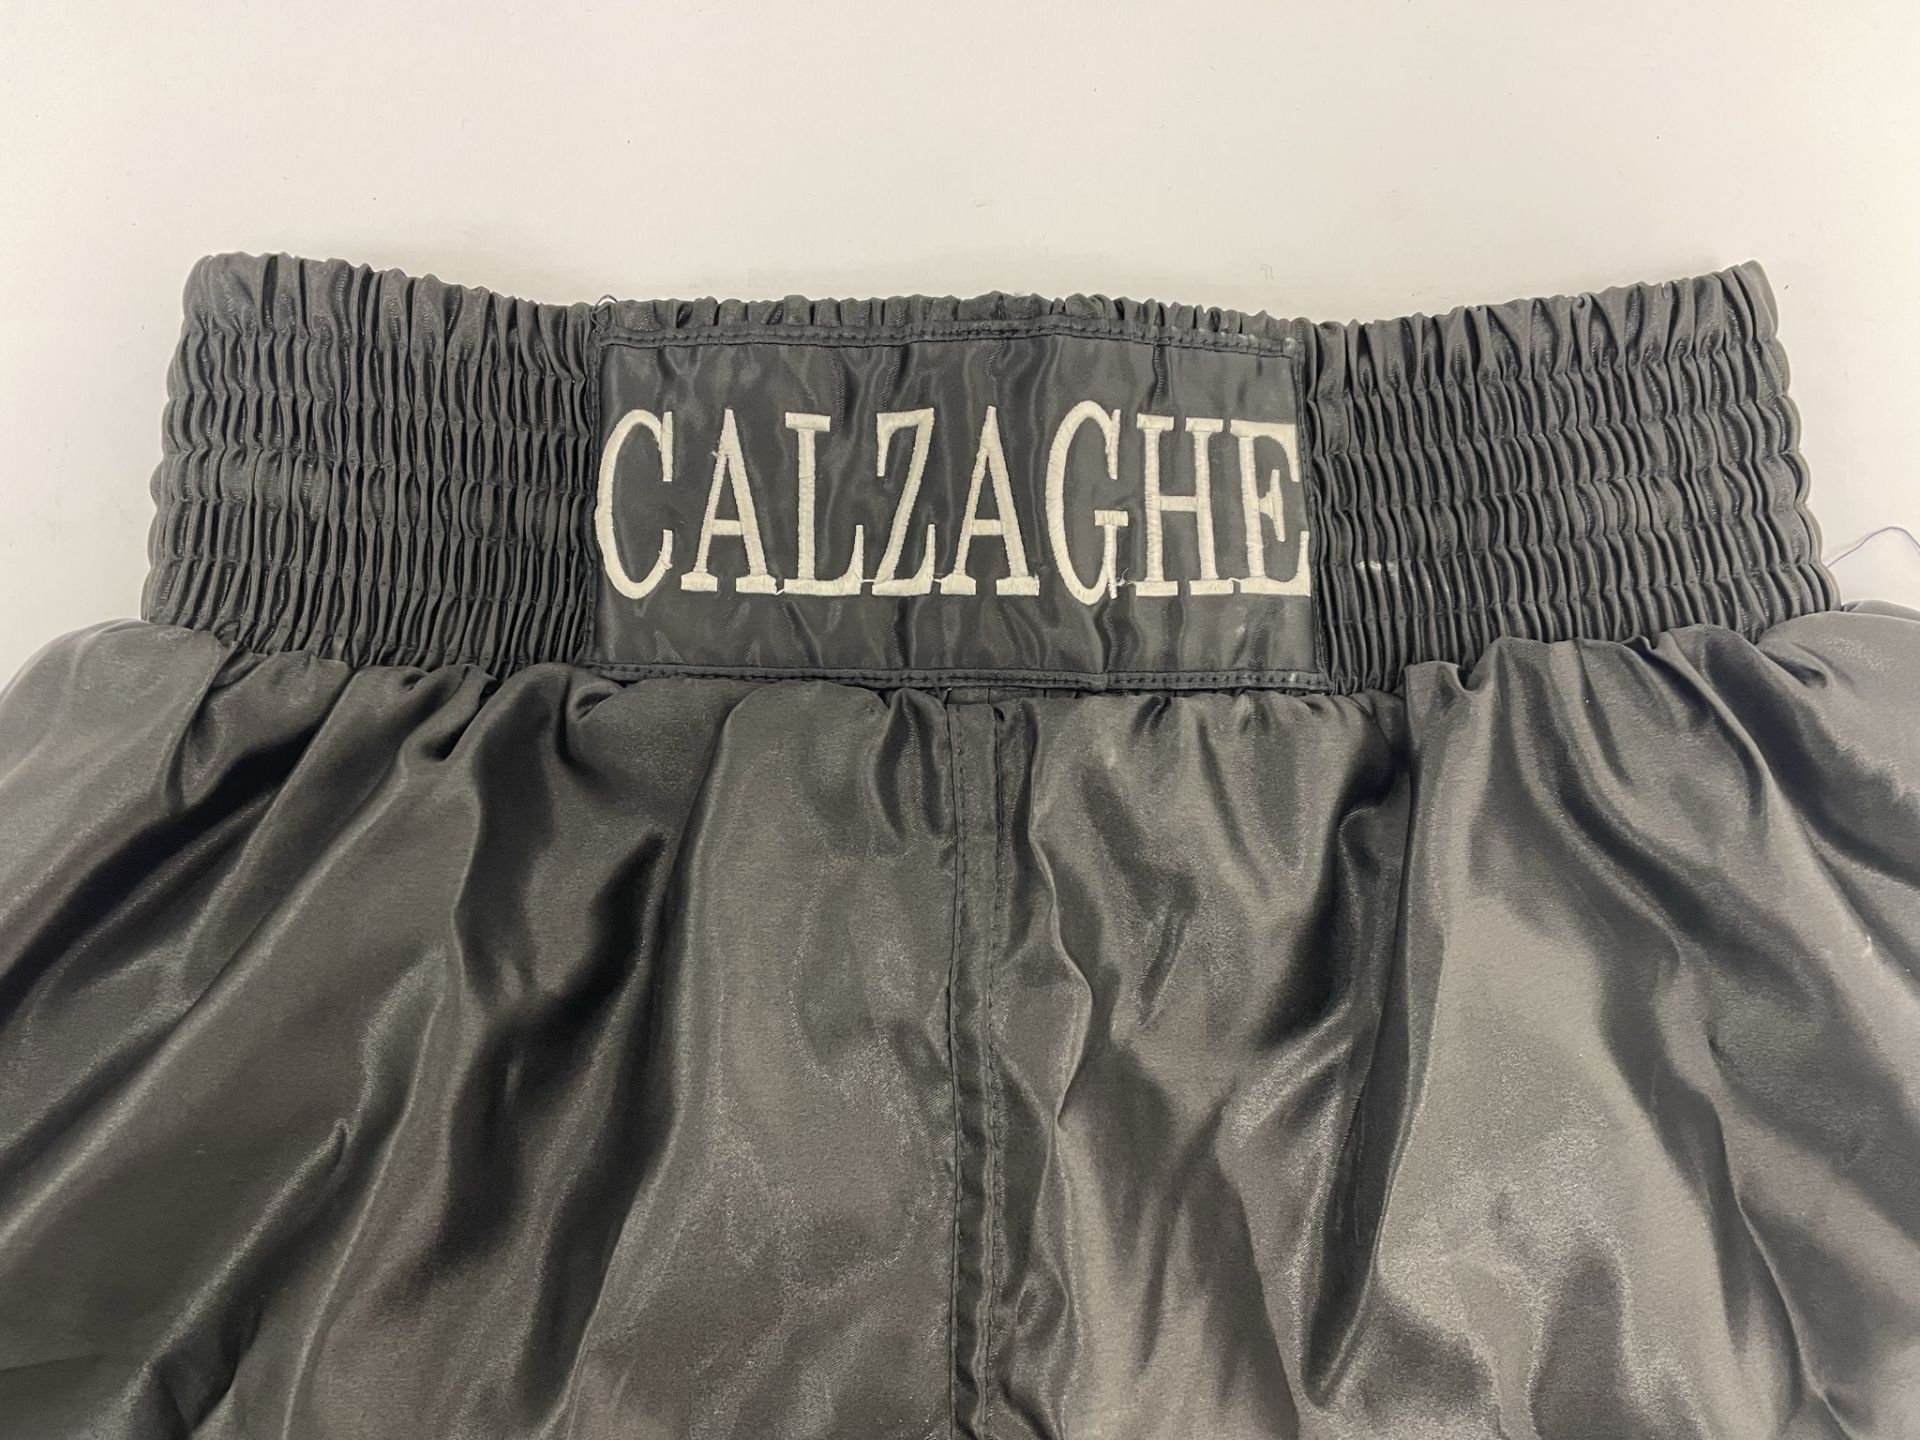 Joe Calzaghe Signed Boxing Trunks w/ COA - Image 5 of 5